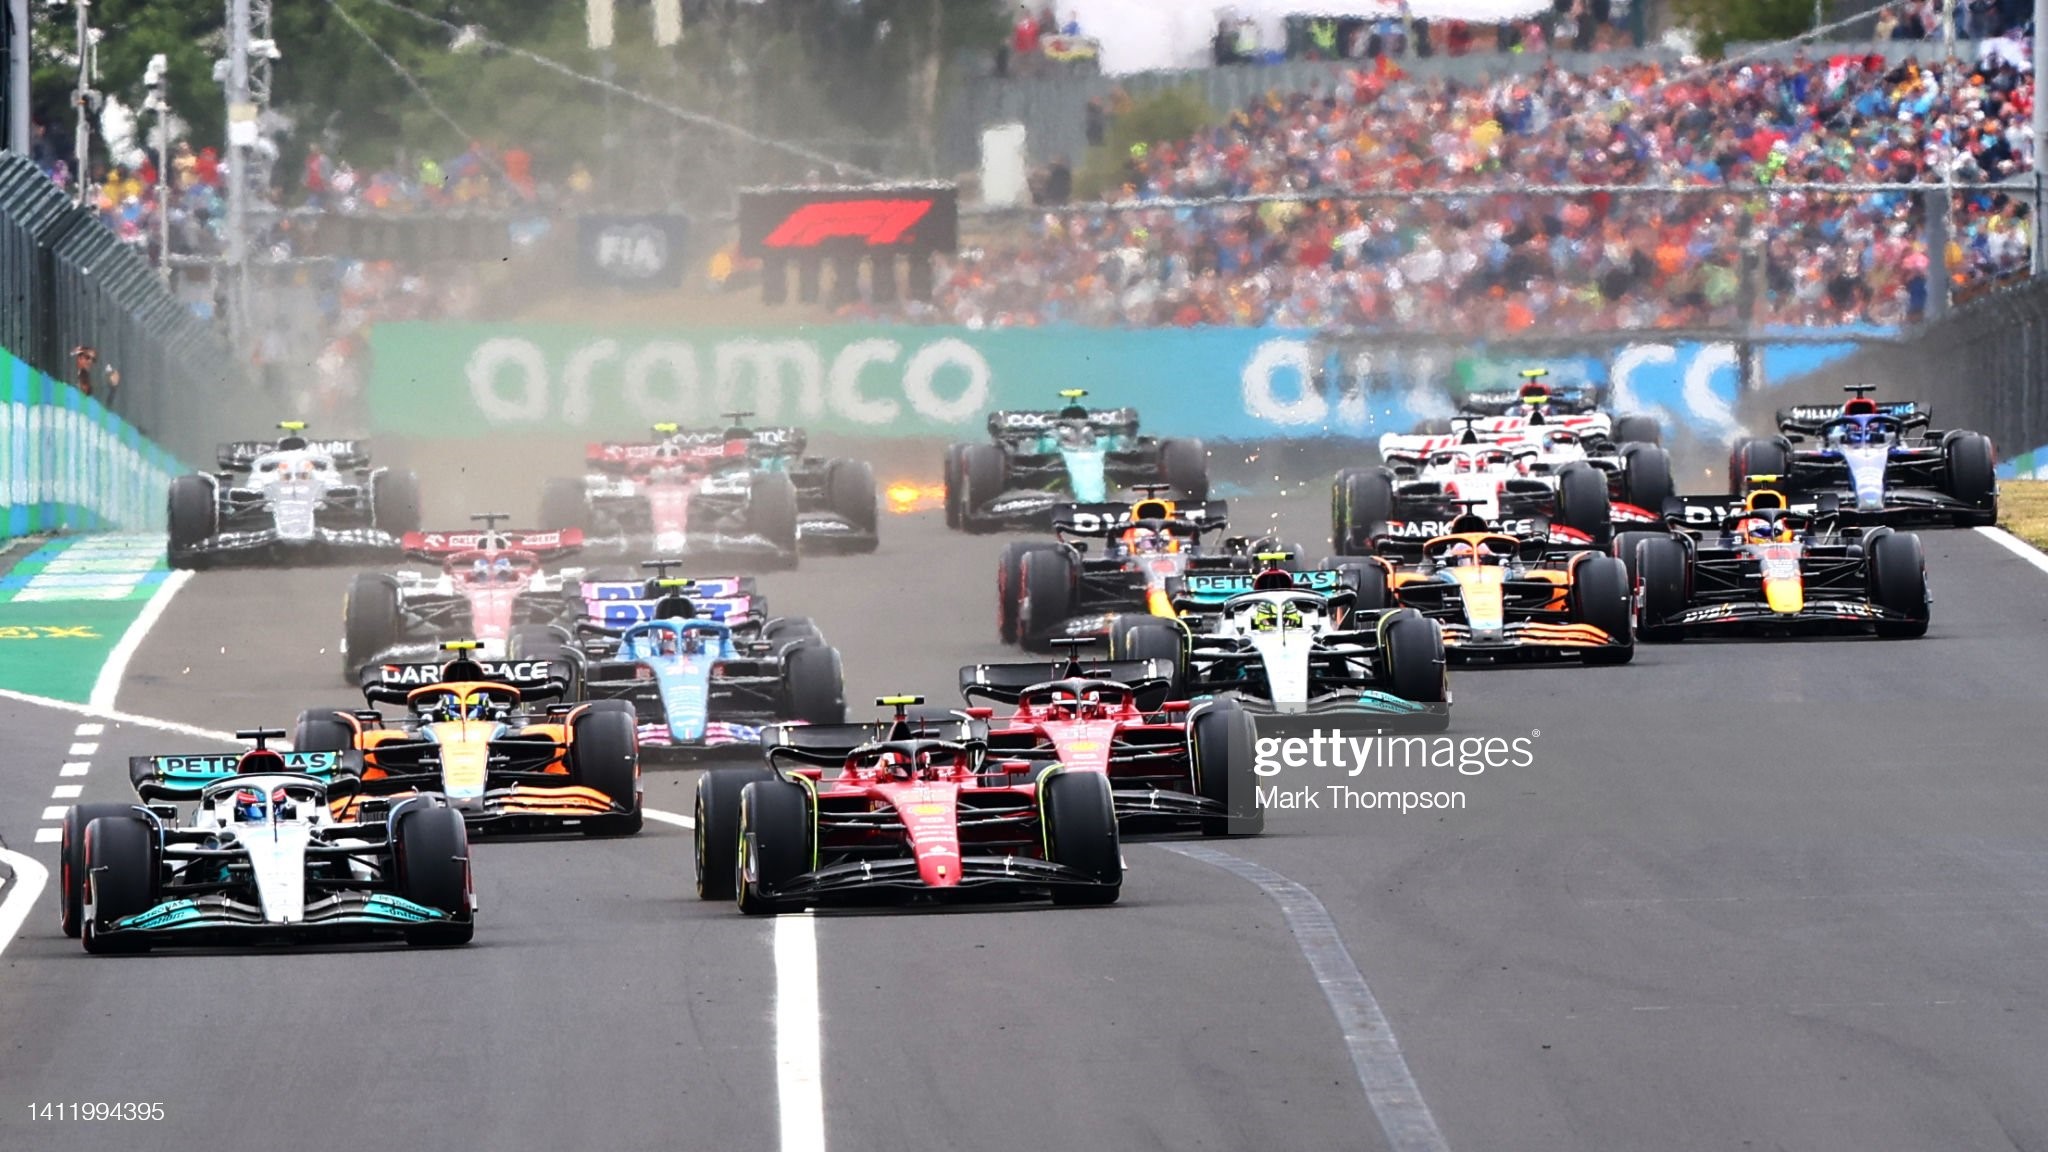 Starting of the Grand Prix